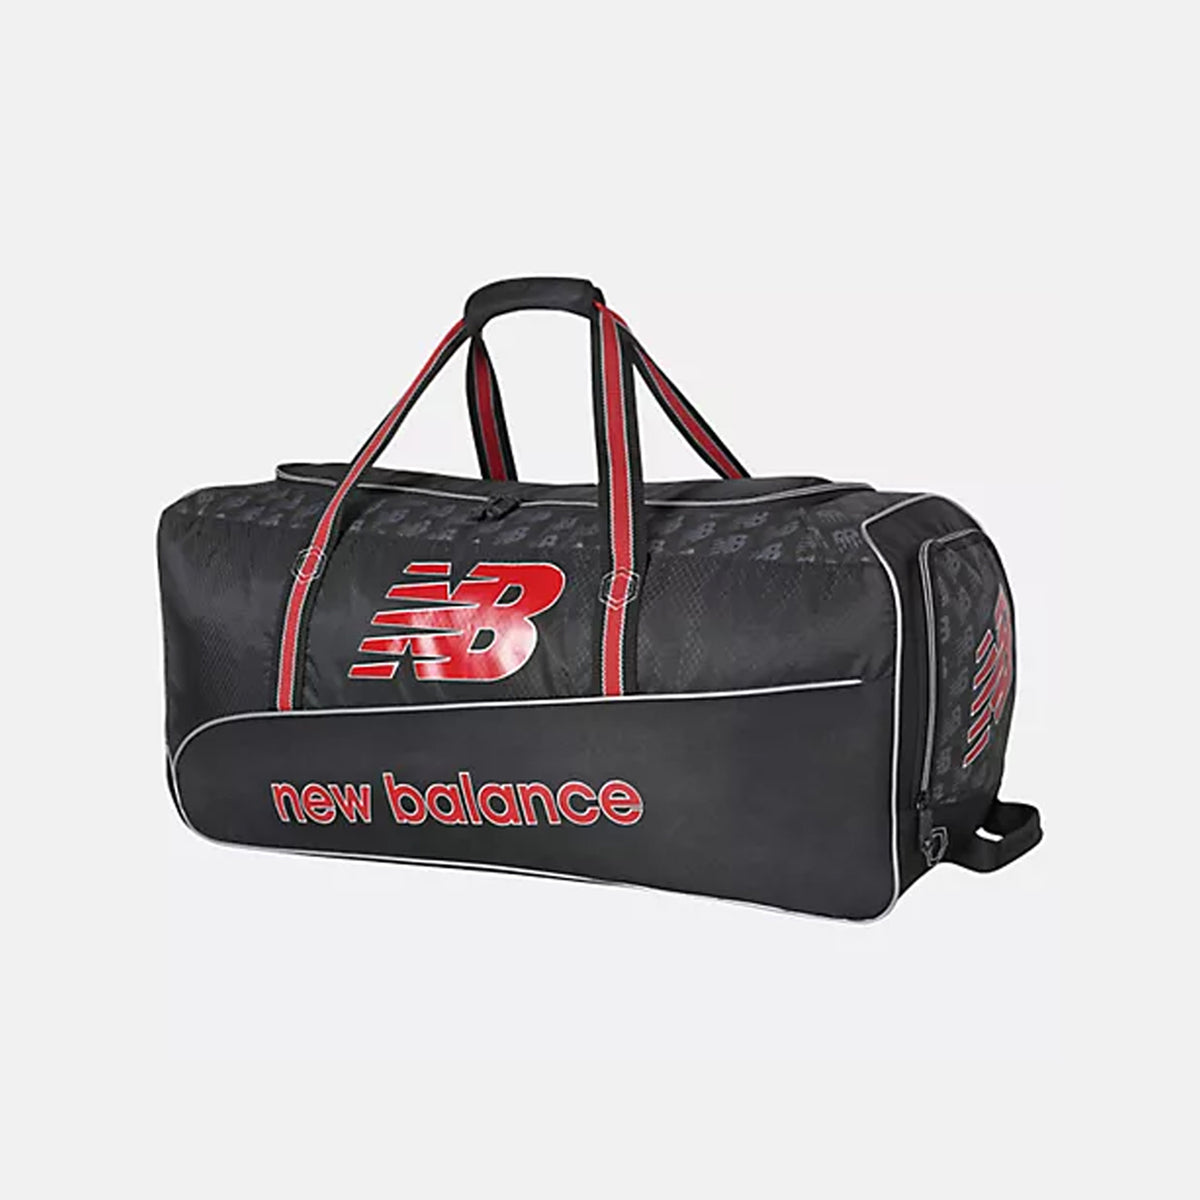 New Balance TC 560 Wheelie Cricket Bag